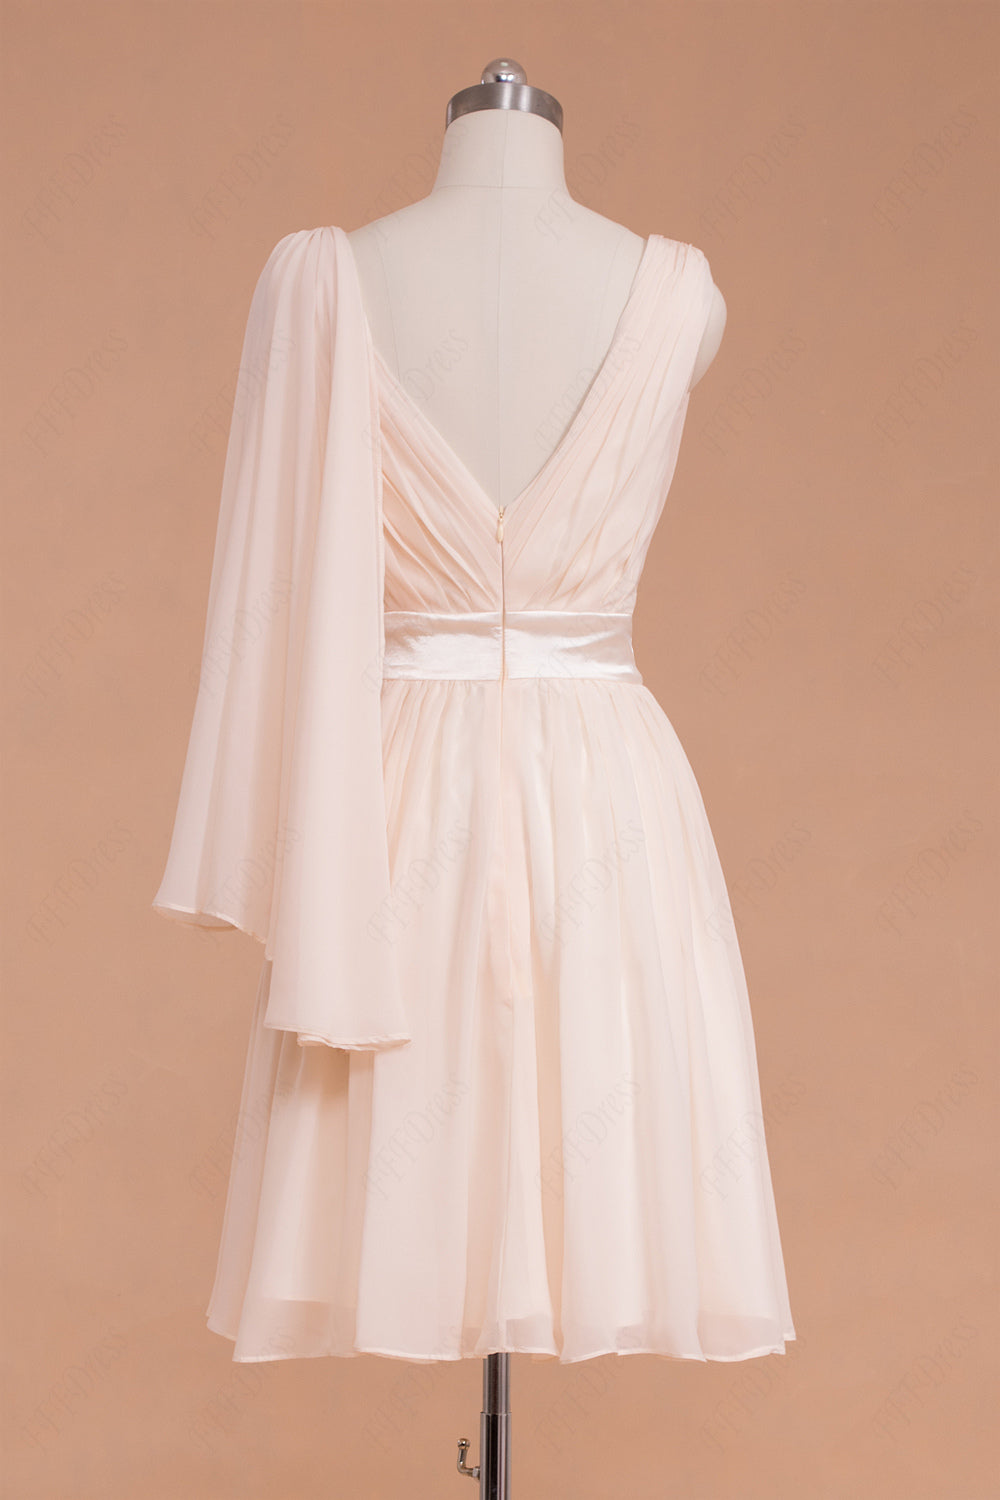 Pale pink short bridesmaid dress knee length